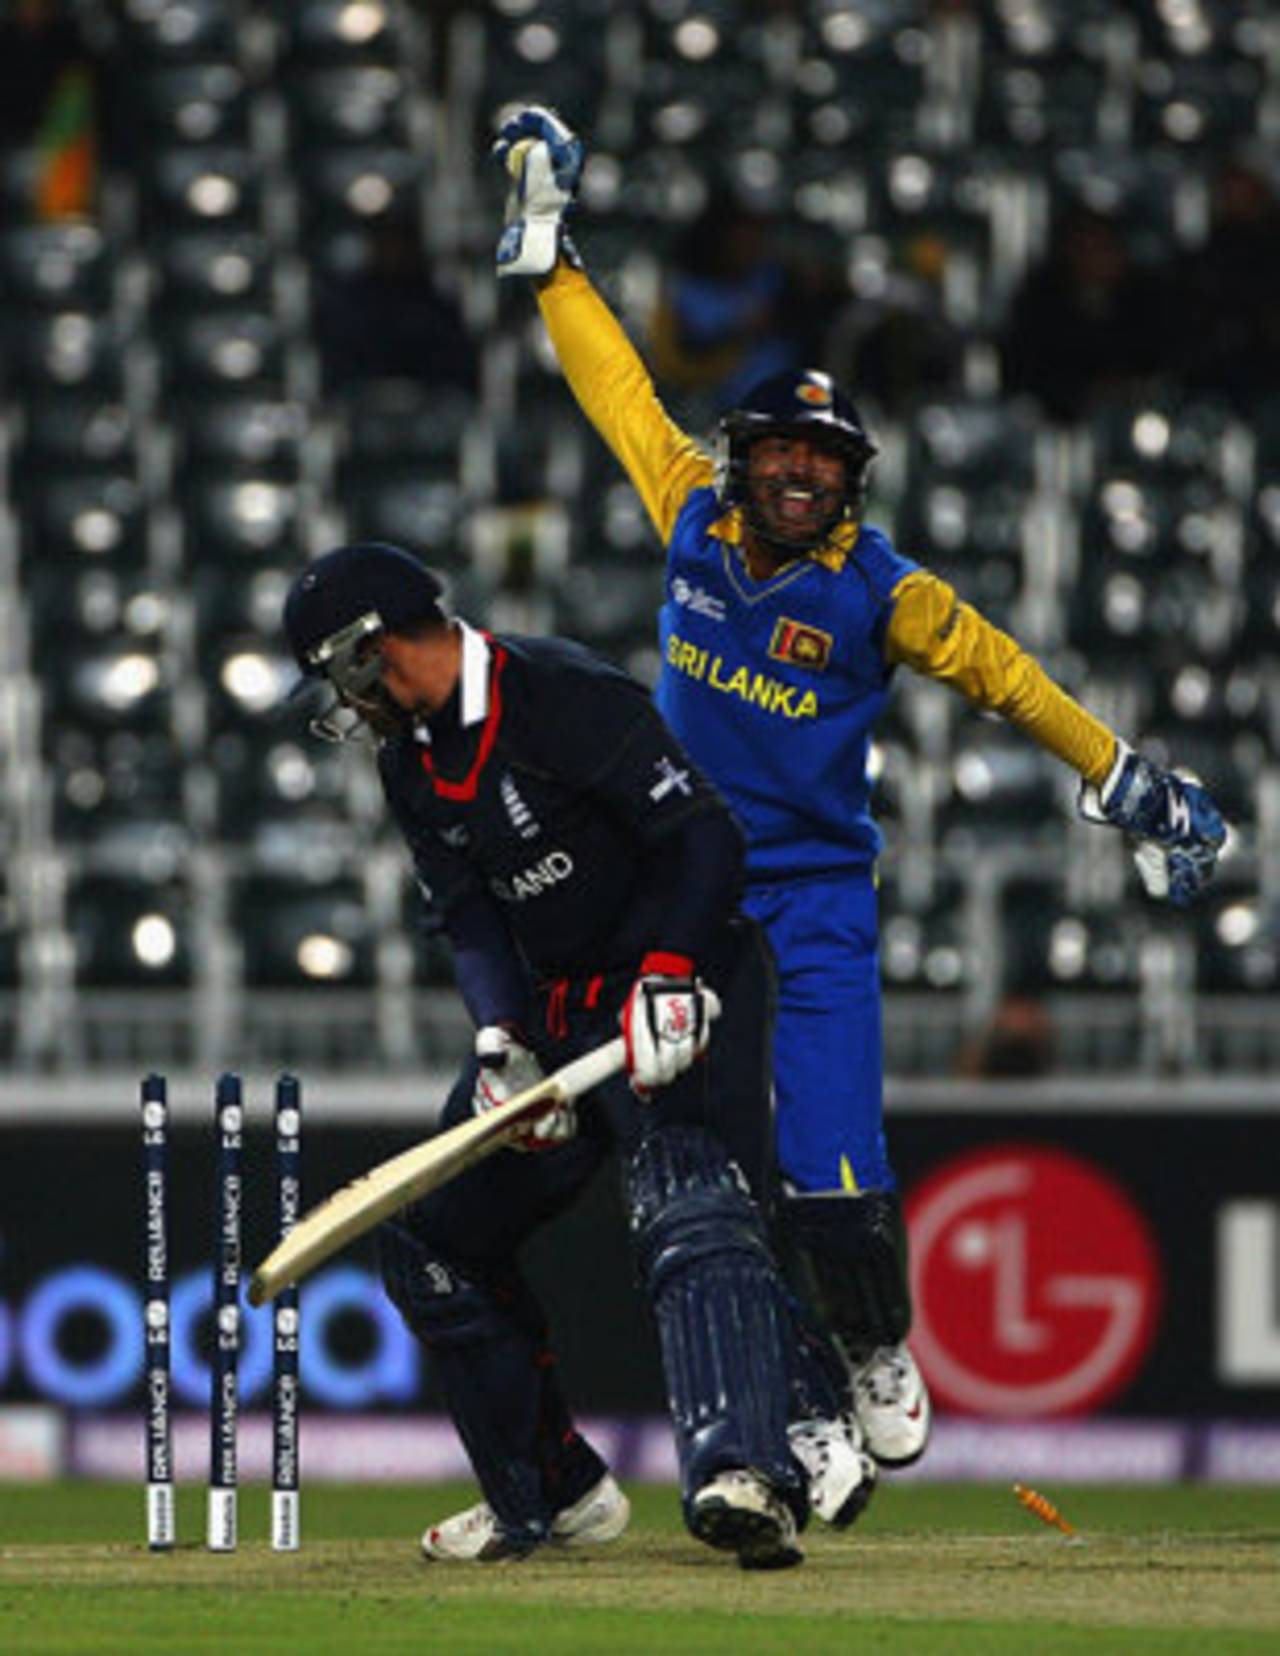 Kumar Sangakkara stumps Owais Shah, England v Sri Lanka, ICC Champions Trophy, Group B, Johannesburg, September 25, 2009